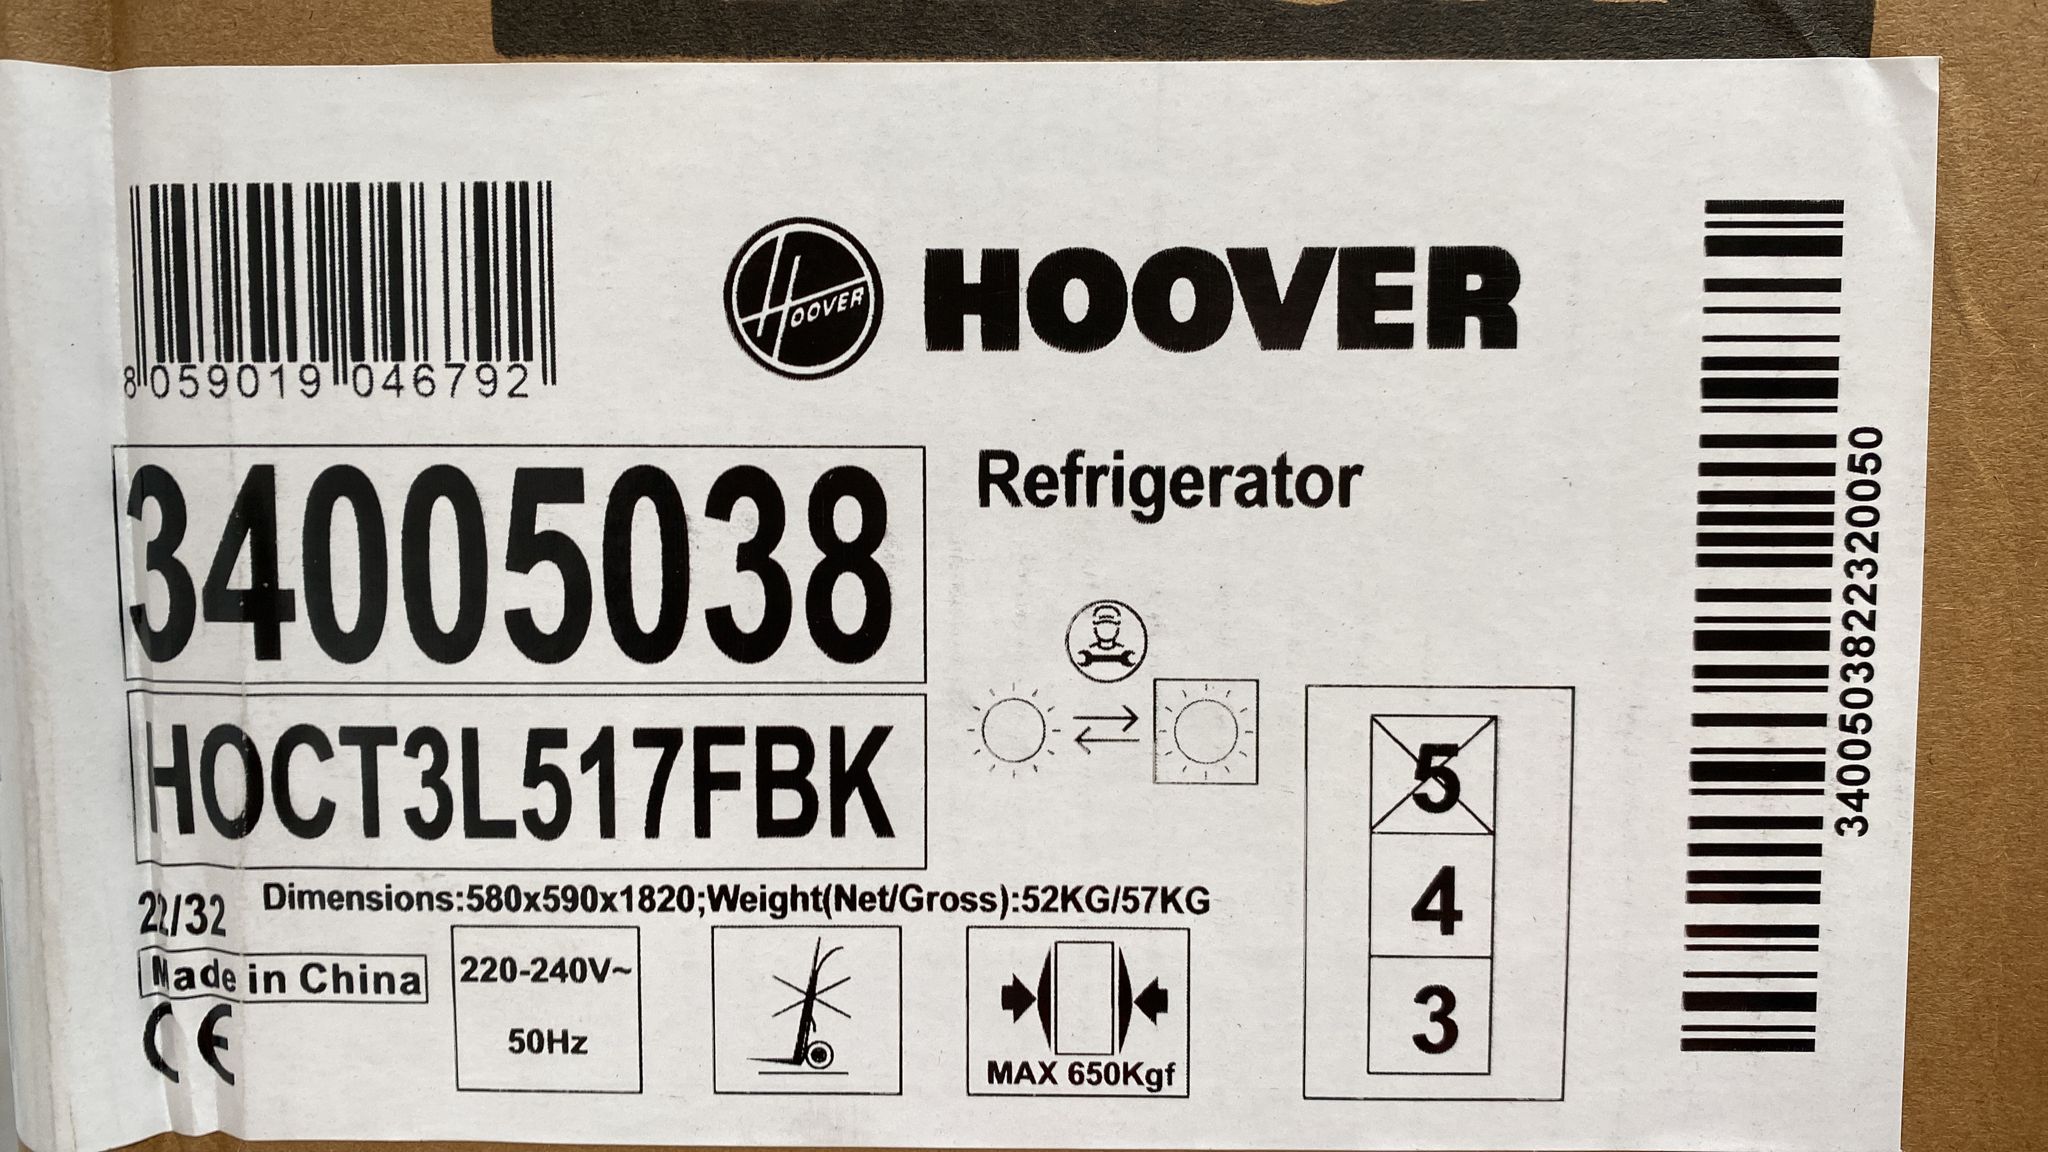 Hoover Fridge Freezer-50/50 Freestanding-Black HOCT3L517FBK-55cm Wide-0050